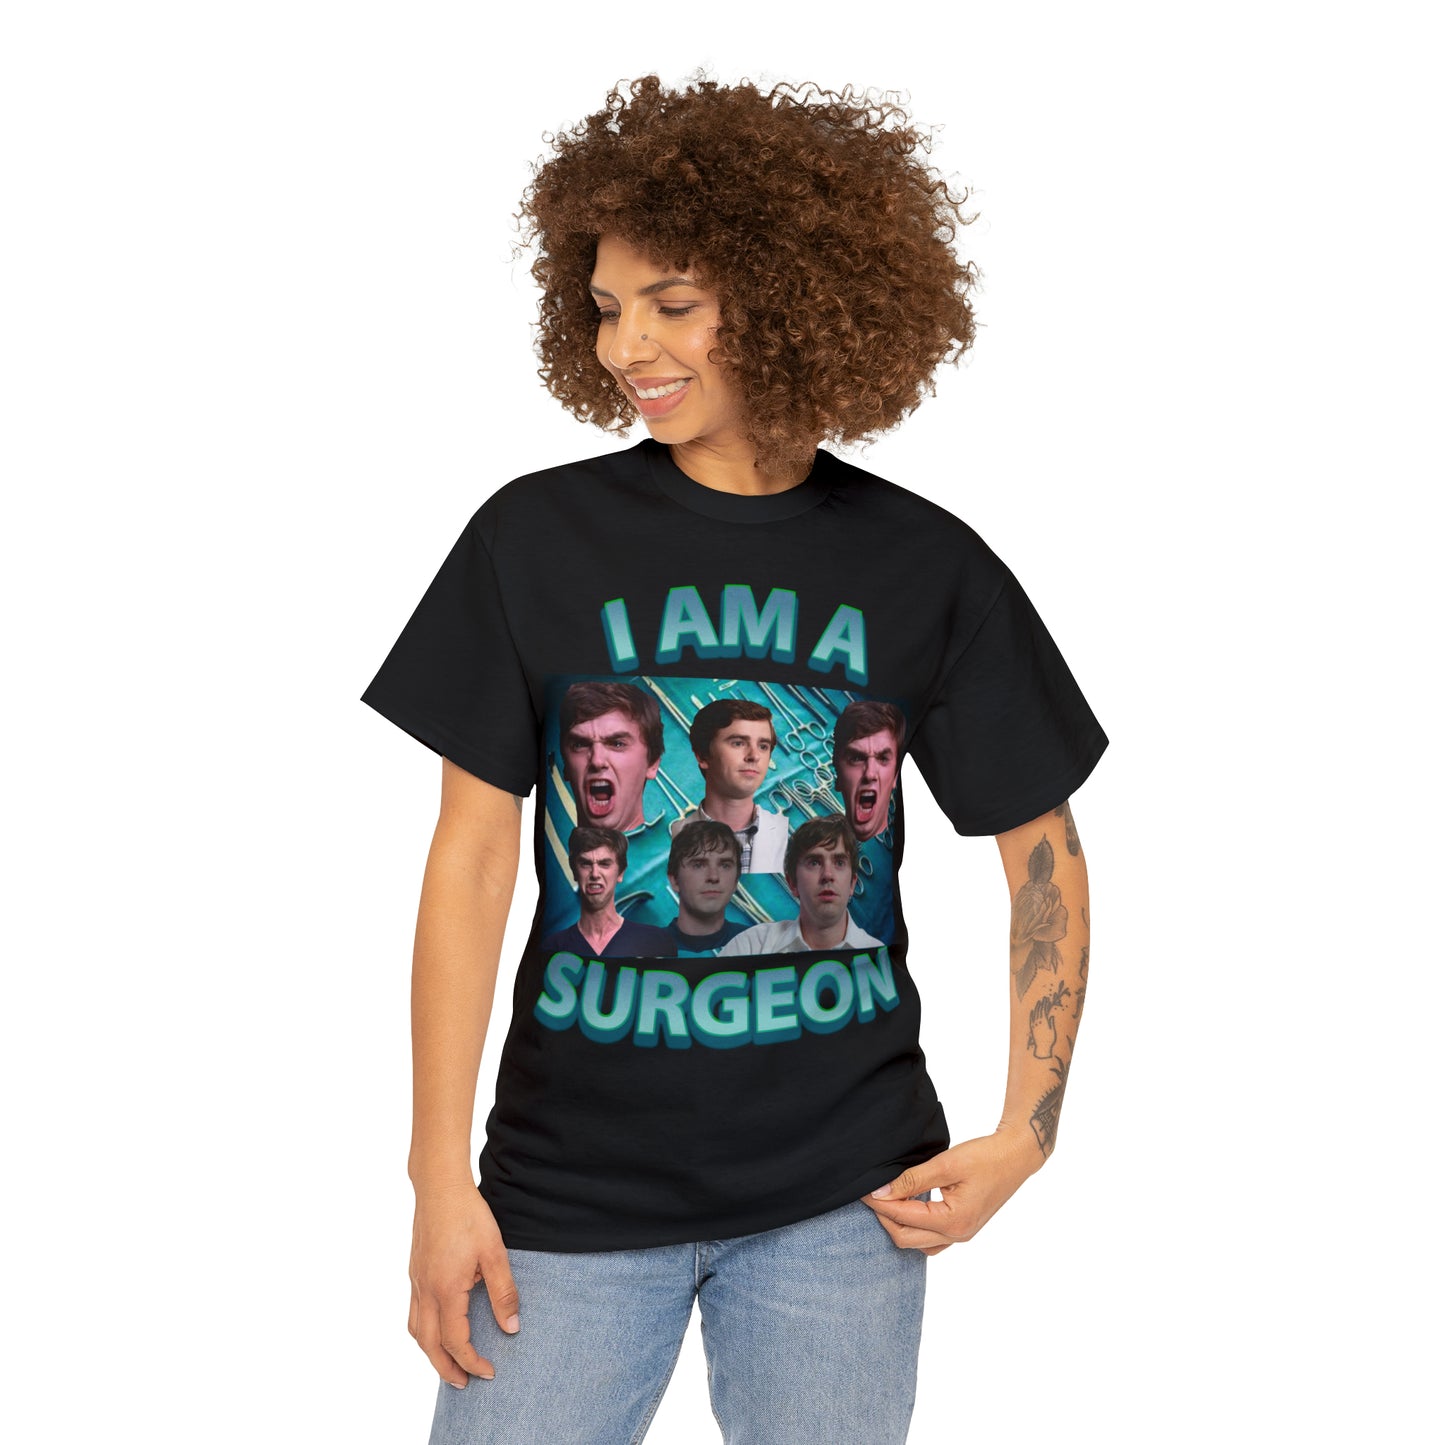 Surgeon T-shirt